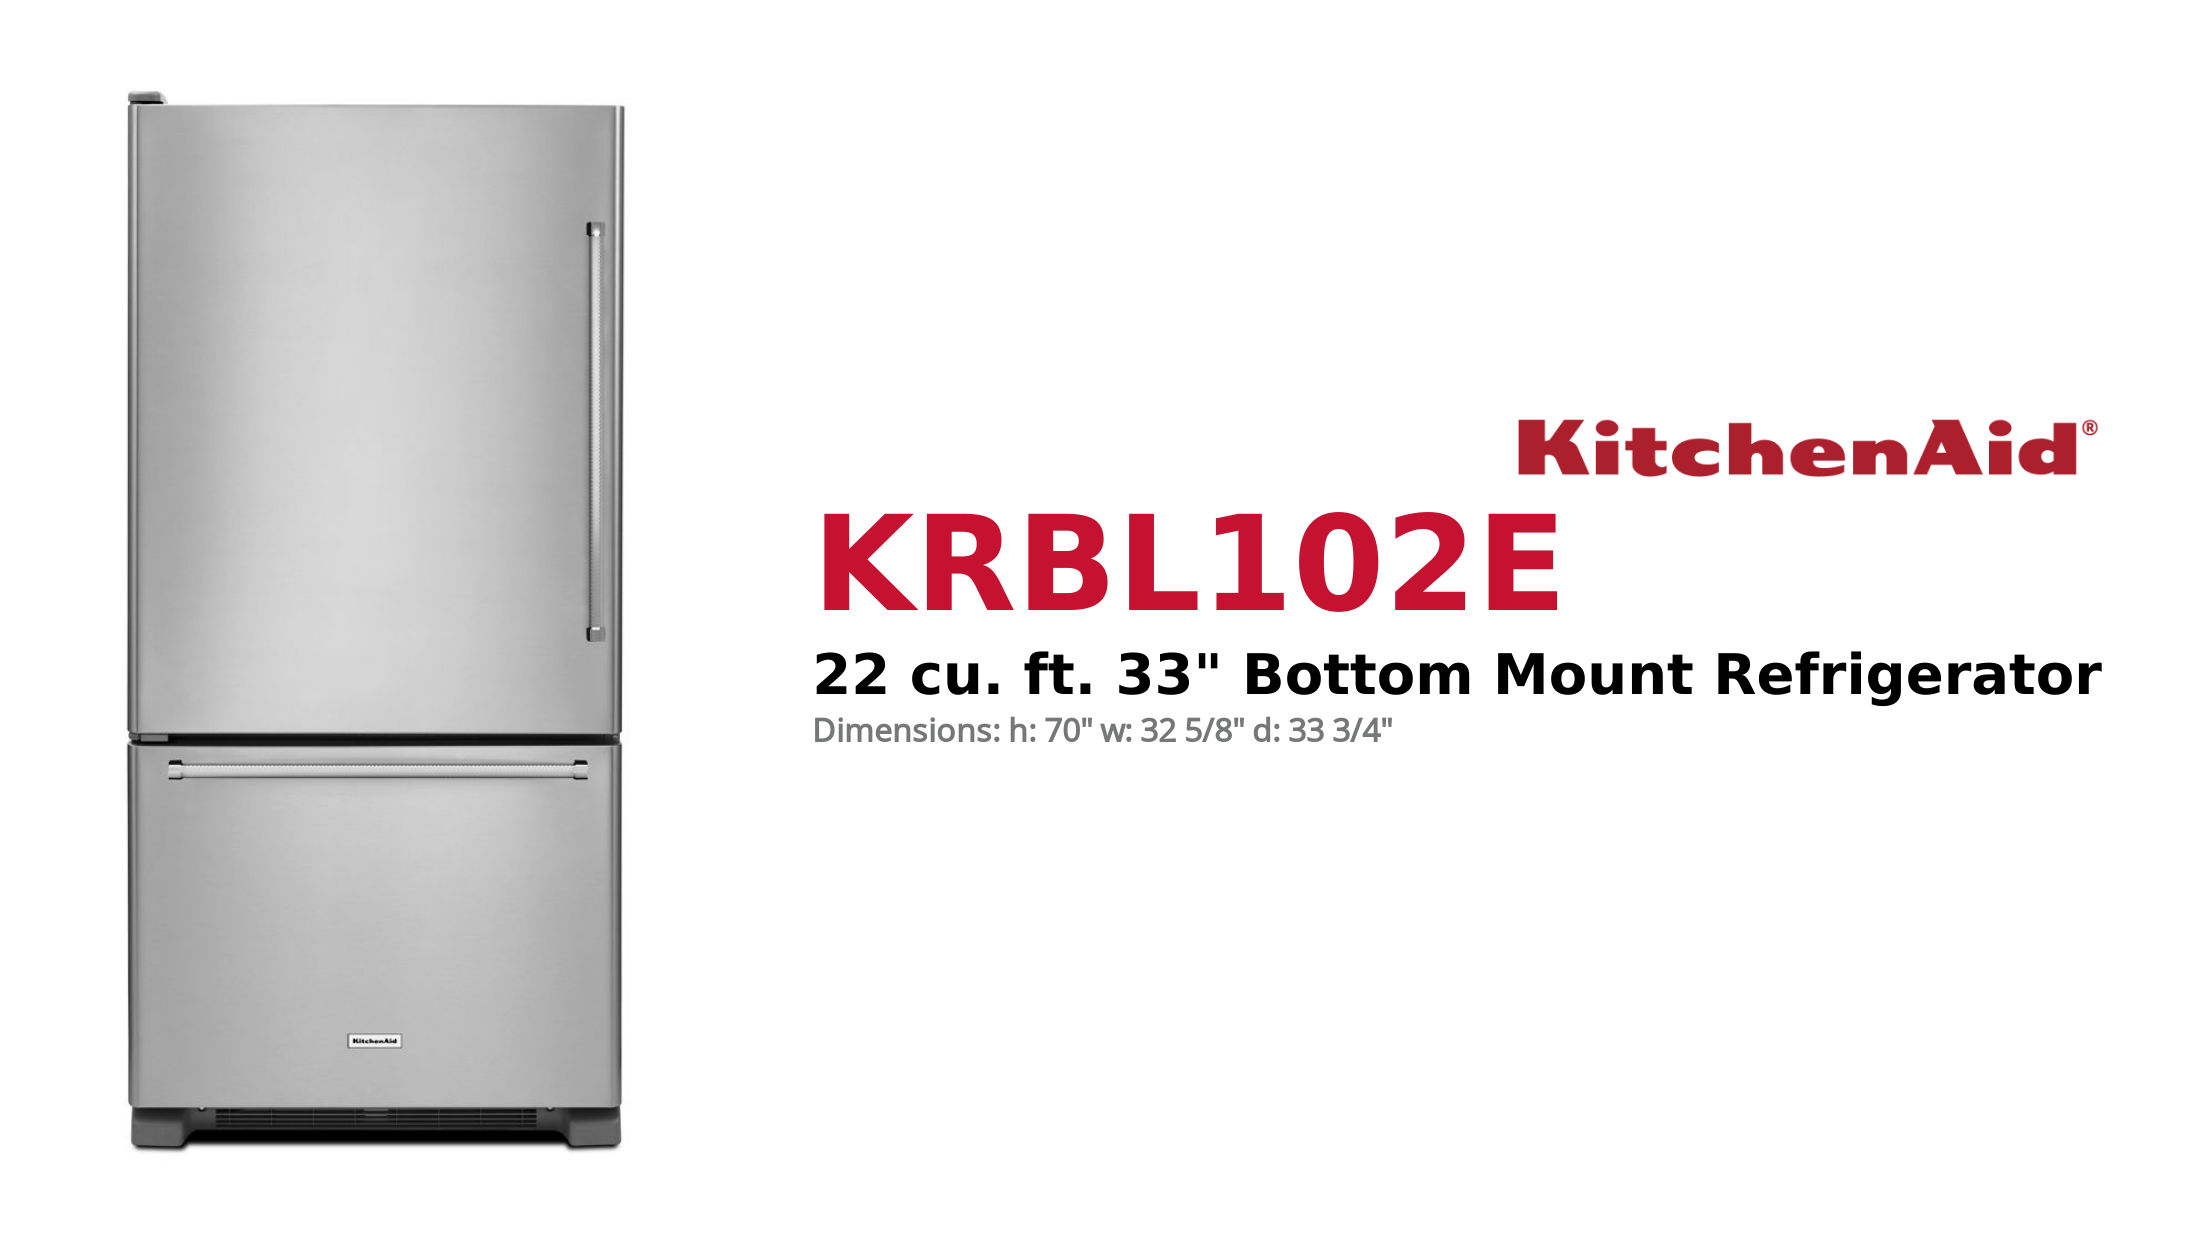 22 cu. ft. 33 Bottom Mount Refrigerator